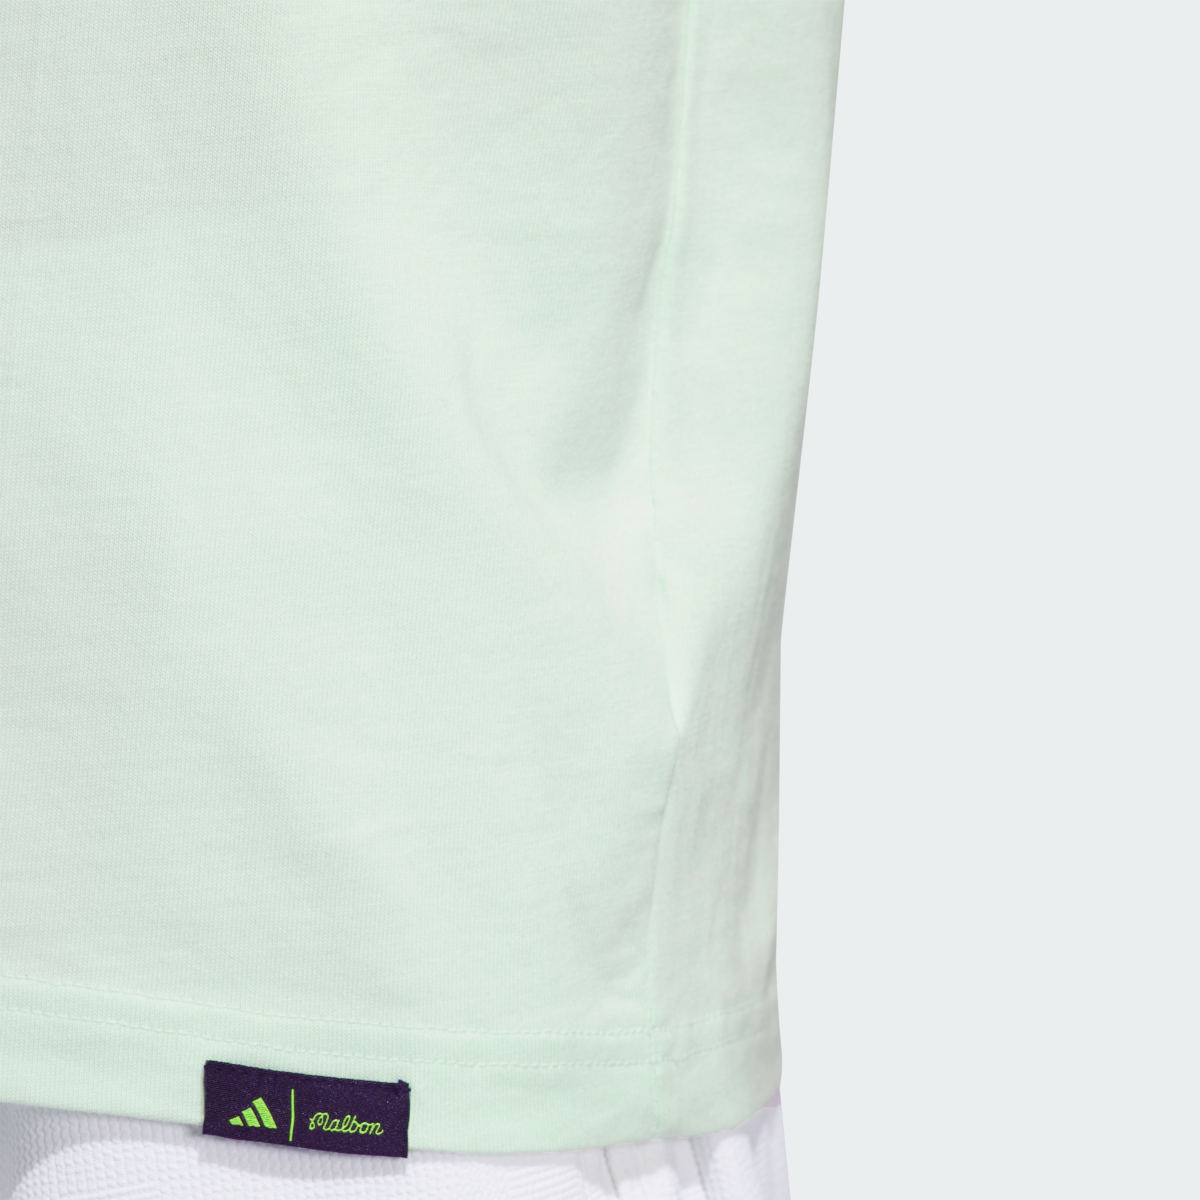 Adidas x Malbon Graphic T-Shirt. 10